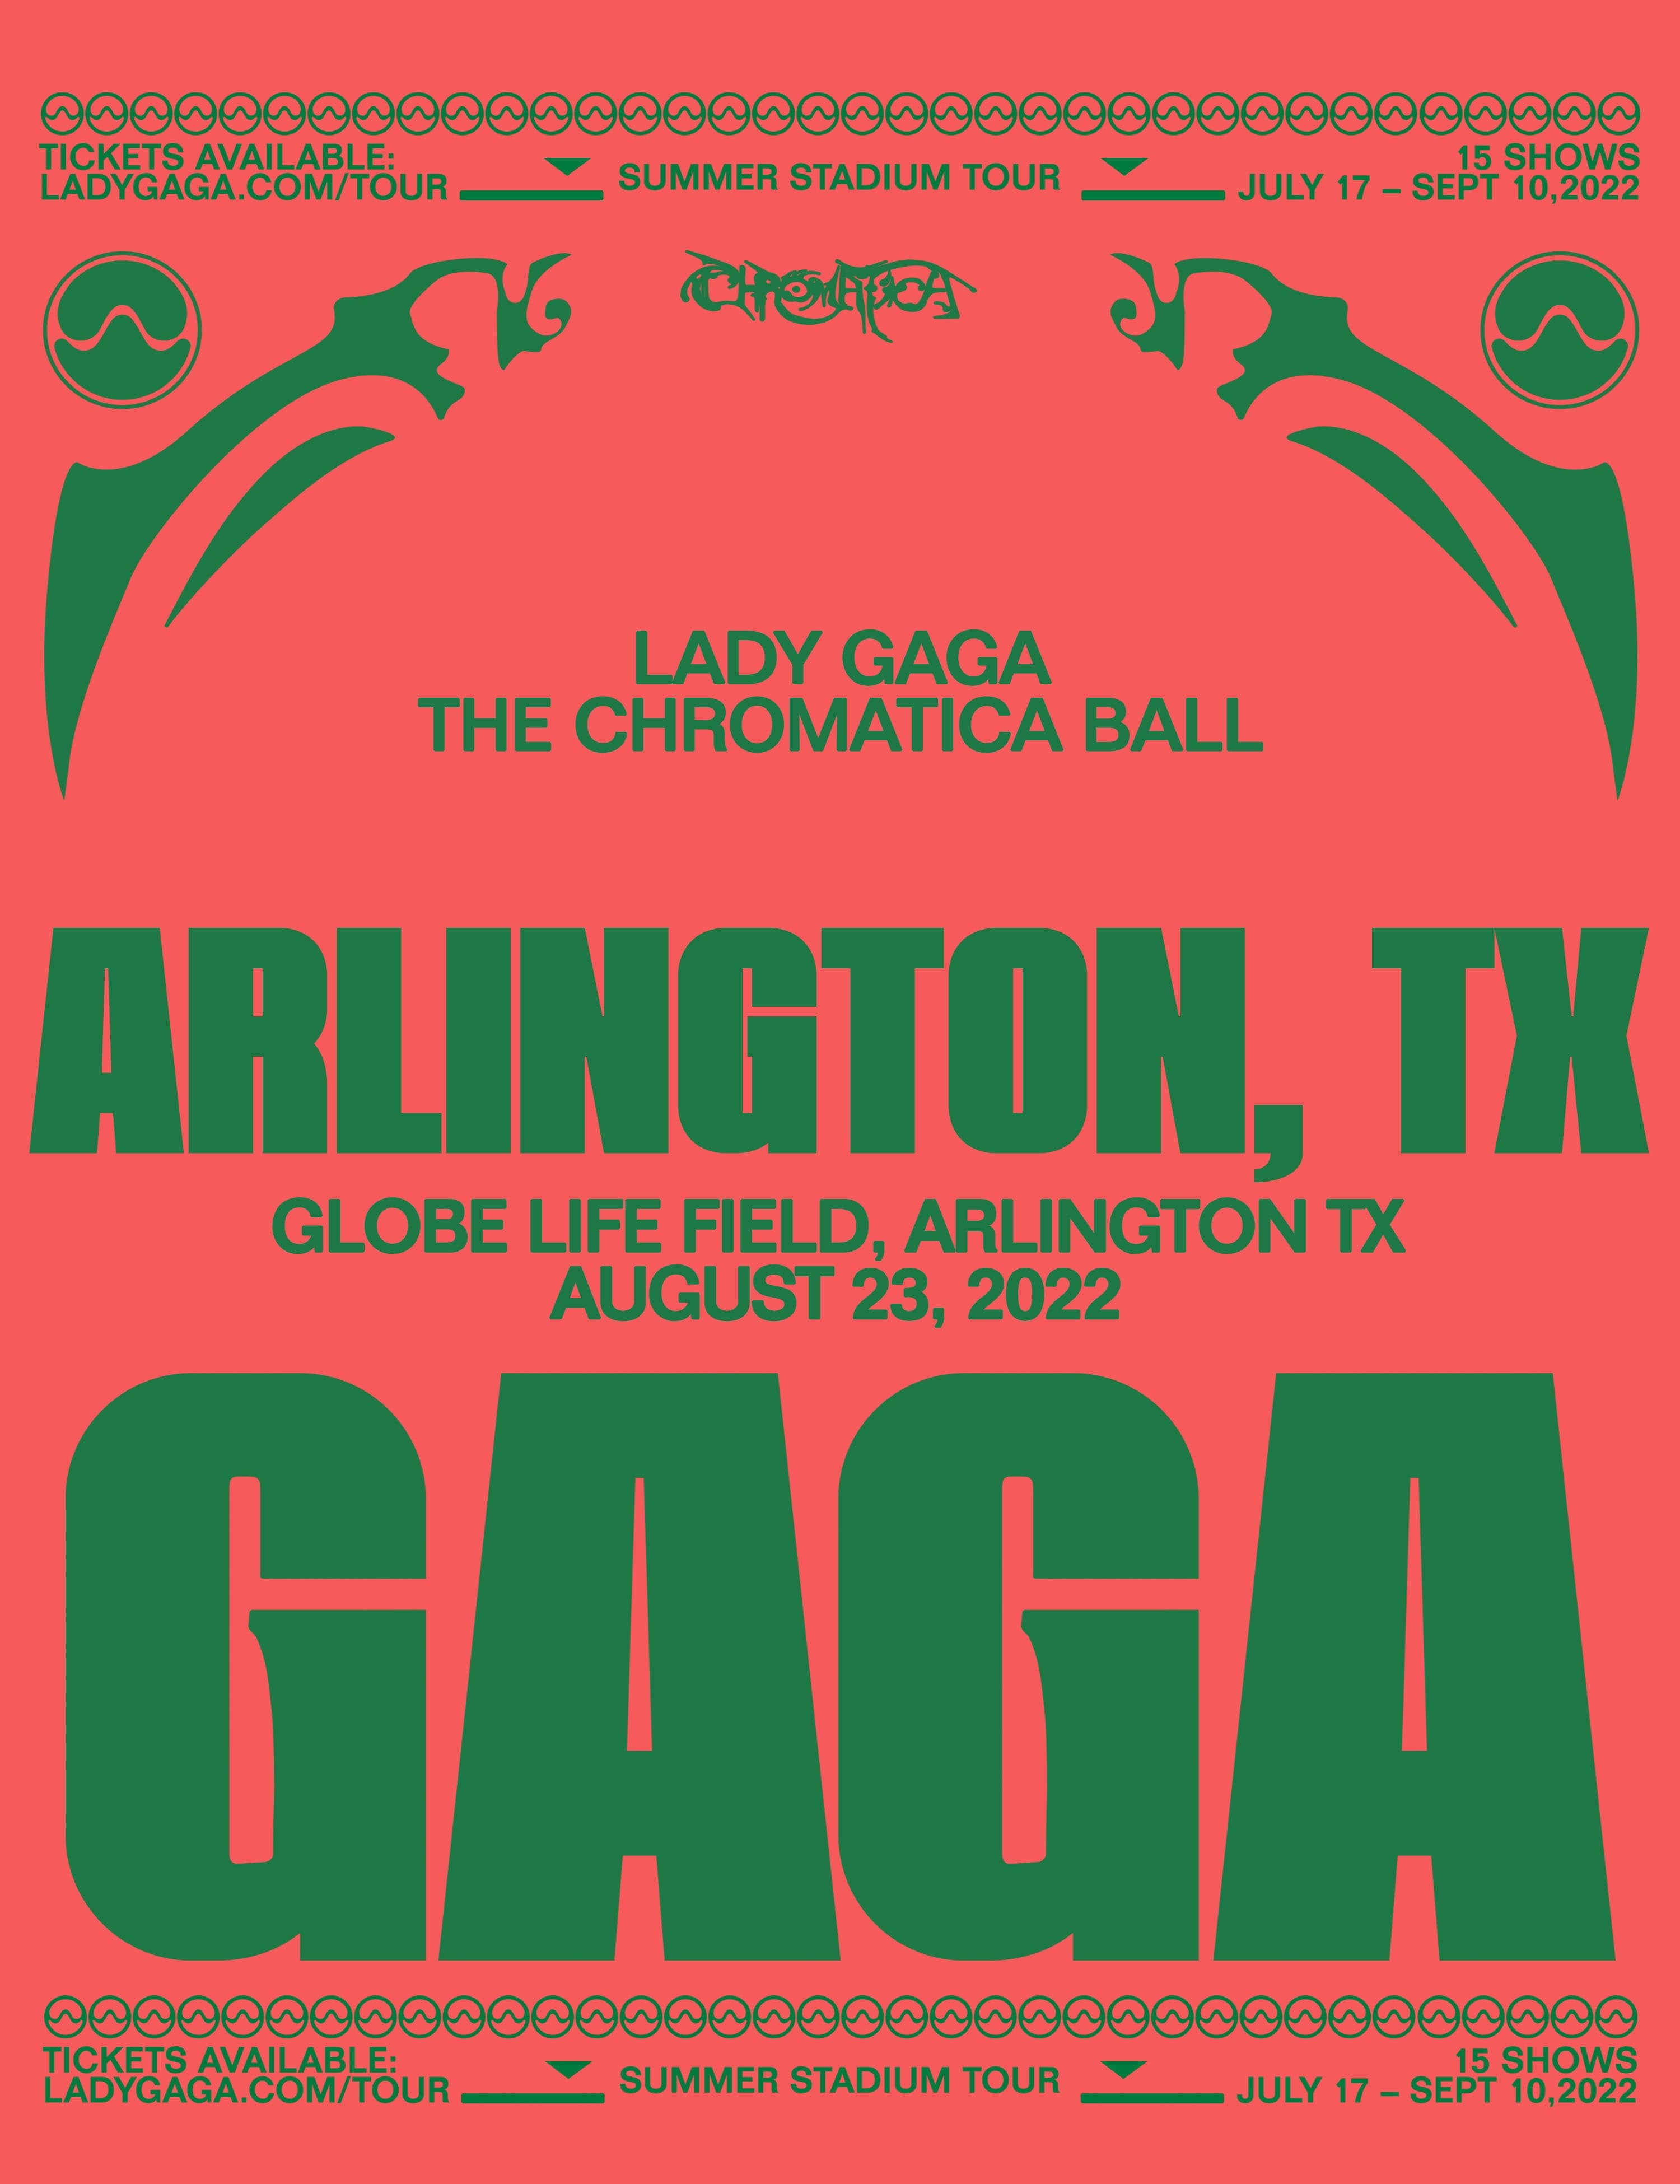 Lady Gaga live in Arlington